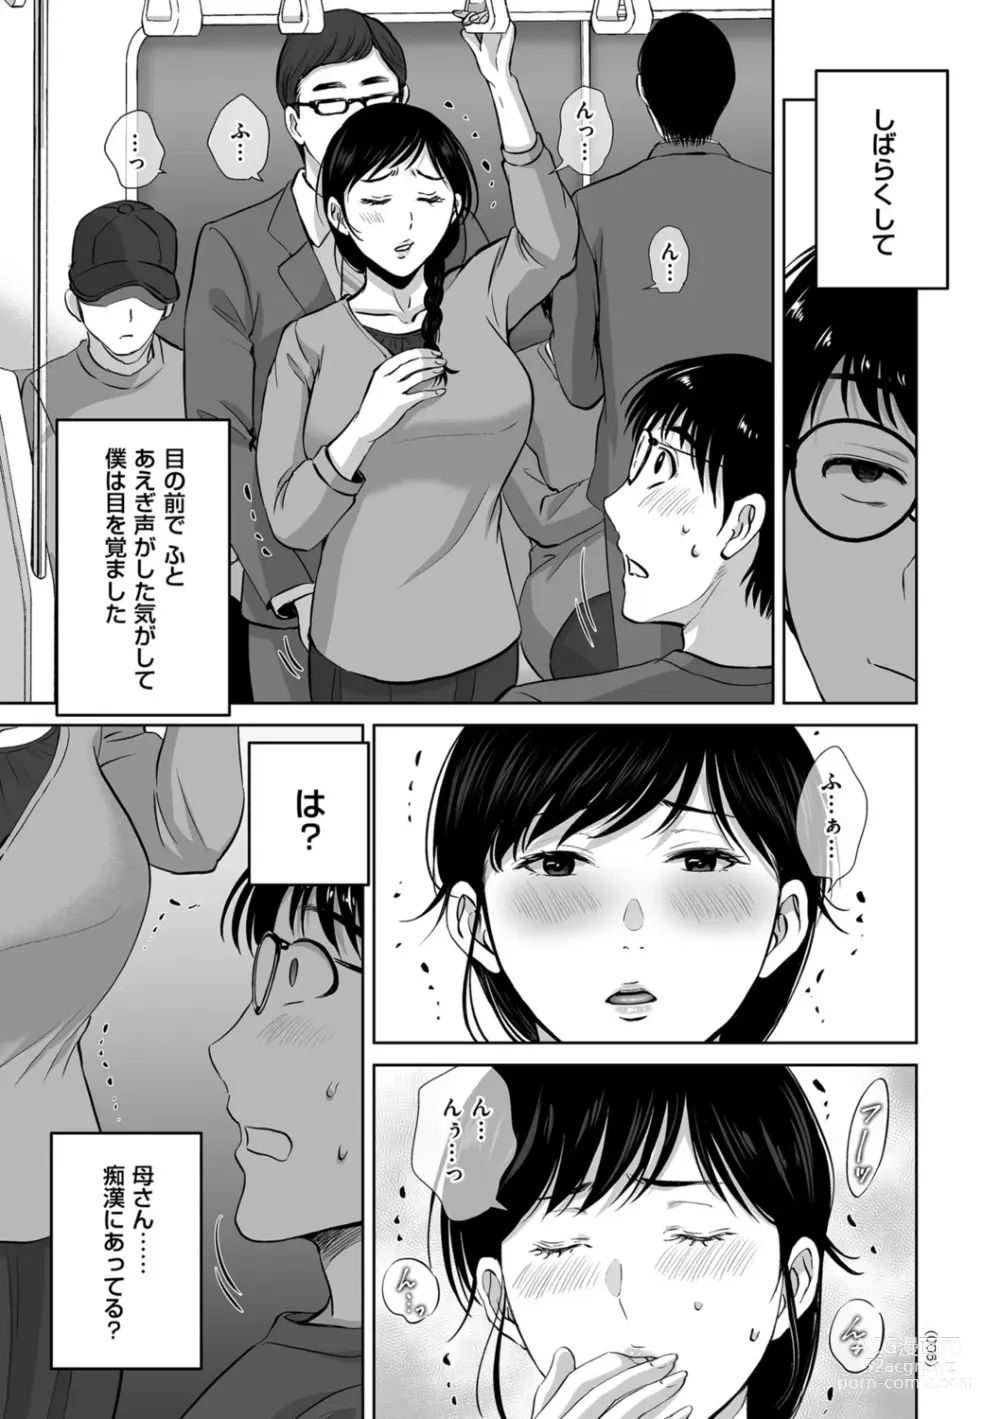 Page 5 of manga Mesuzakari no Haha-tachi e